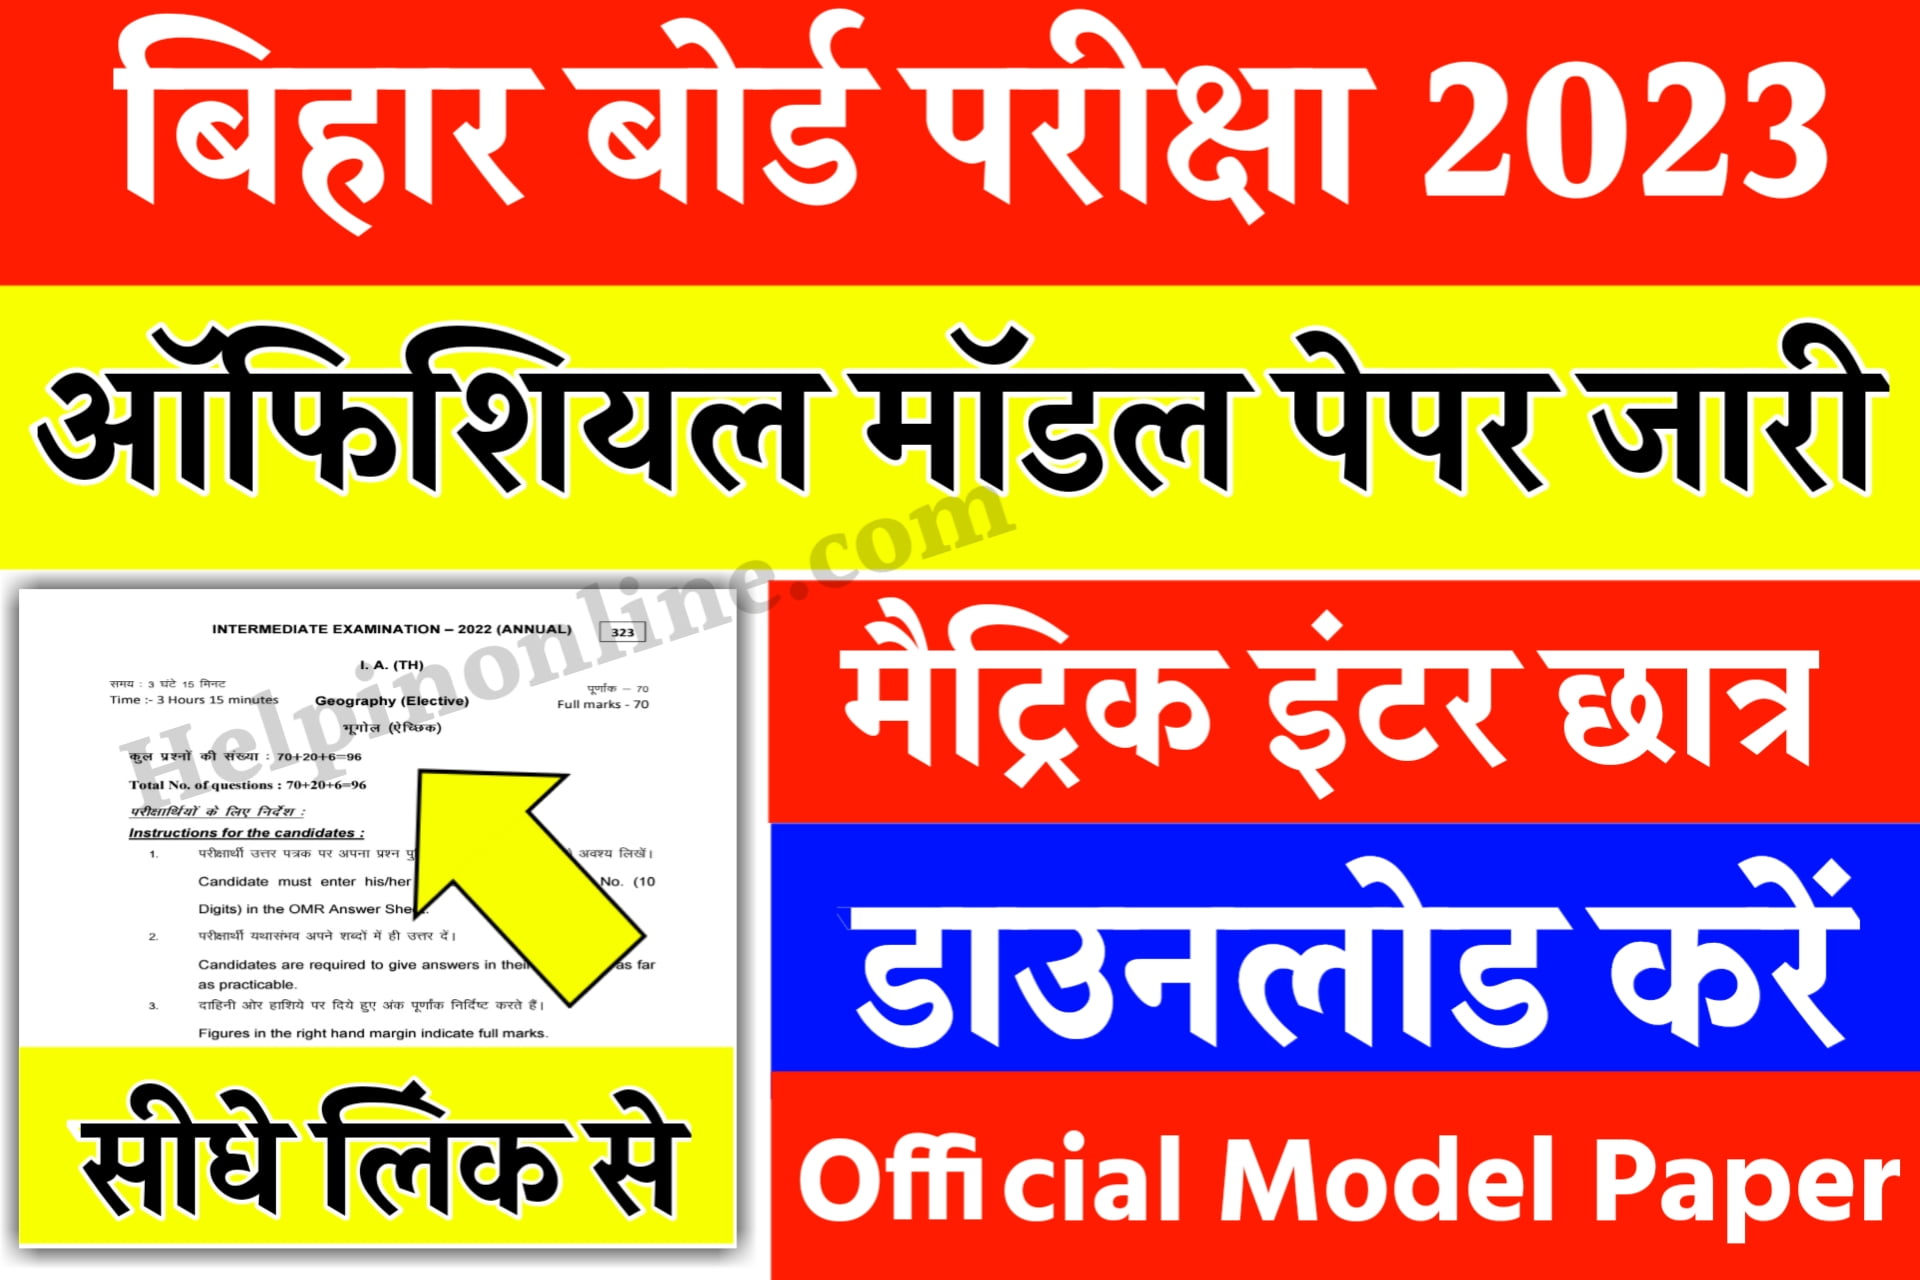 Bihar Board Model Paper Download 2023 , bihar board model paper 2023 , bihar board model paper download kaise kare , बिहार बोर्ड मॉडल पेपर 2023 , बिहार बोर्ड मॉडल पेपर 2023 कैसे डाउनलोड करें , बिहार बोर्ड मॉडल पेपर 2022 12th